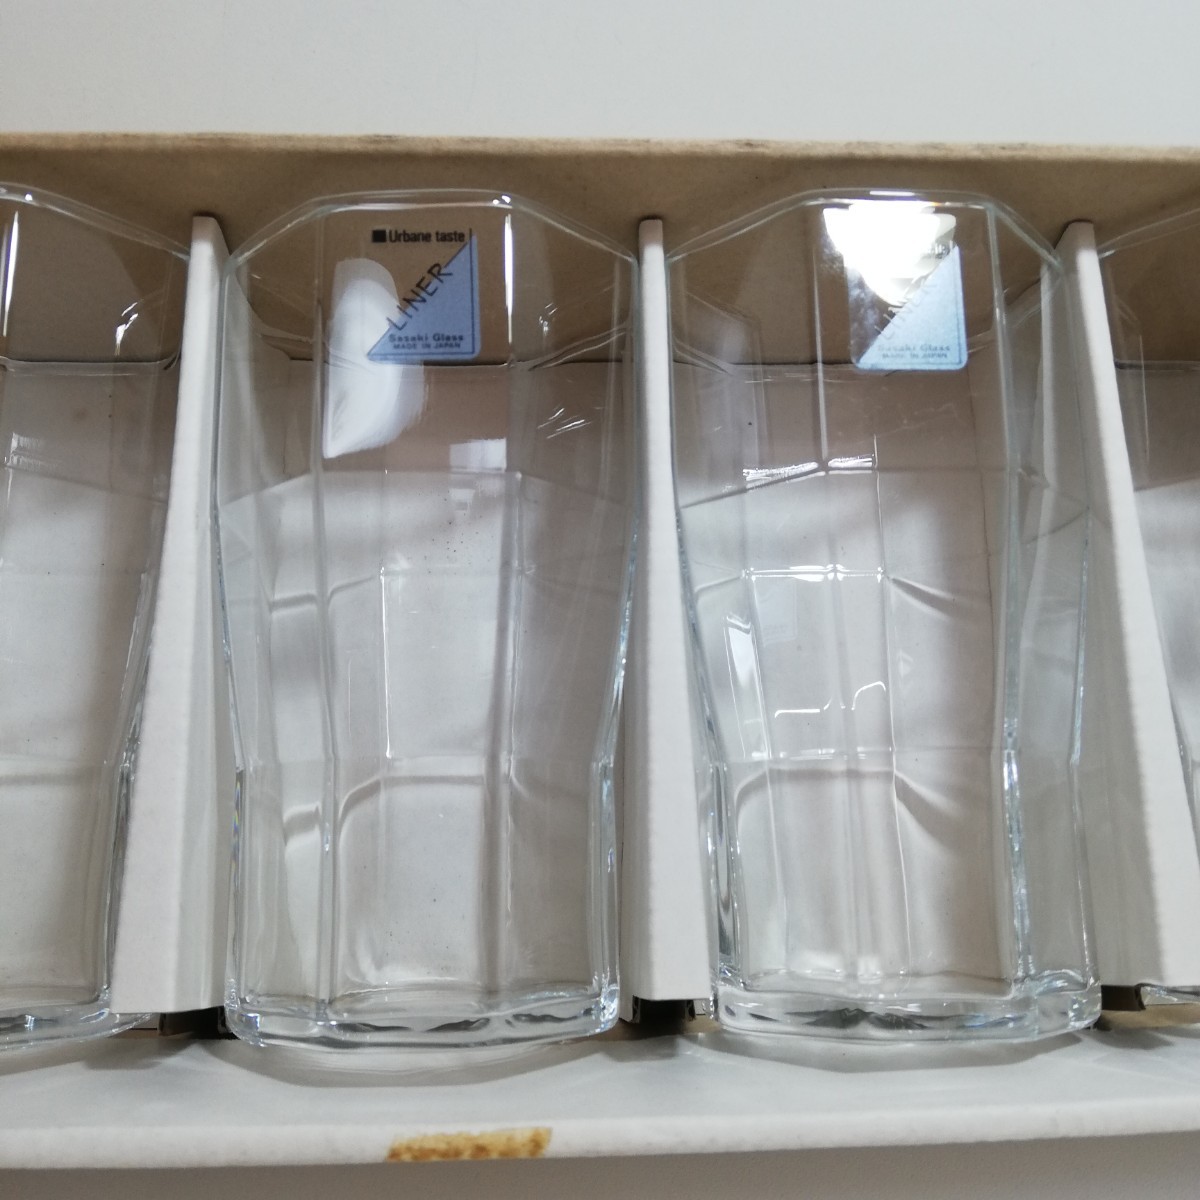 Sasaki Glass 佐々木硝子 Urbane taste LINER 八角タンブラー 5客セット 未使用品 [日本製 MADE IN JAPAN ガラスコップ グラス タンブラー]_画像3